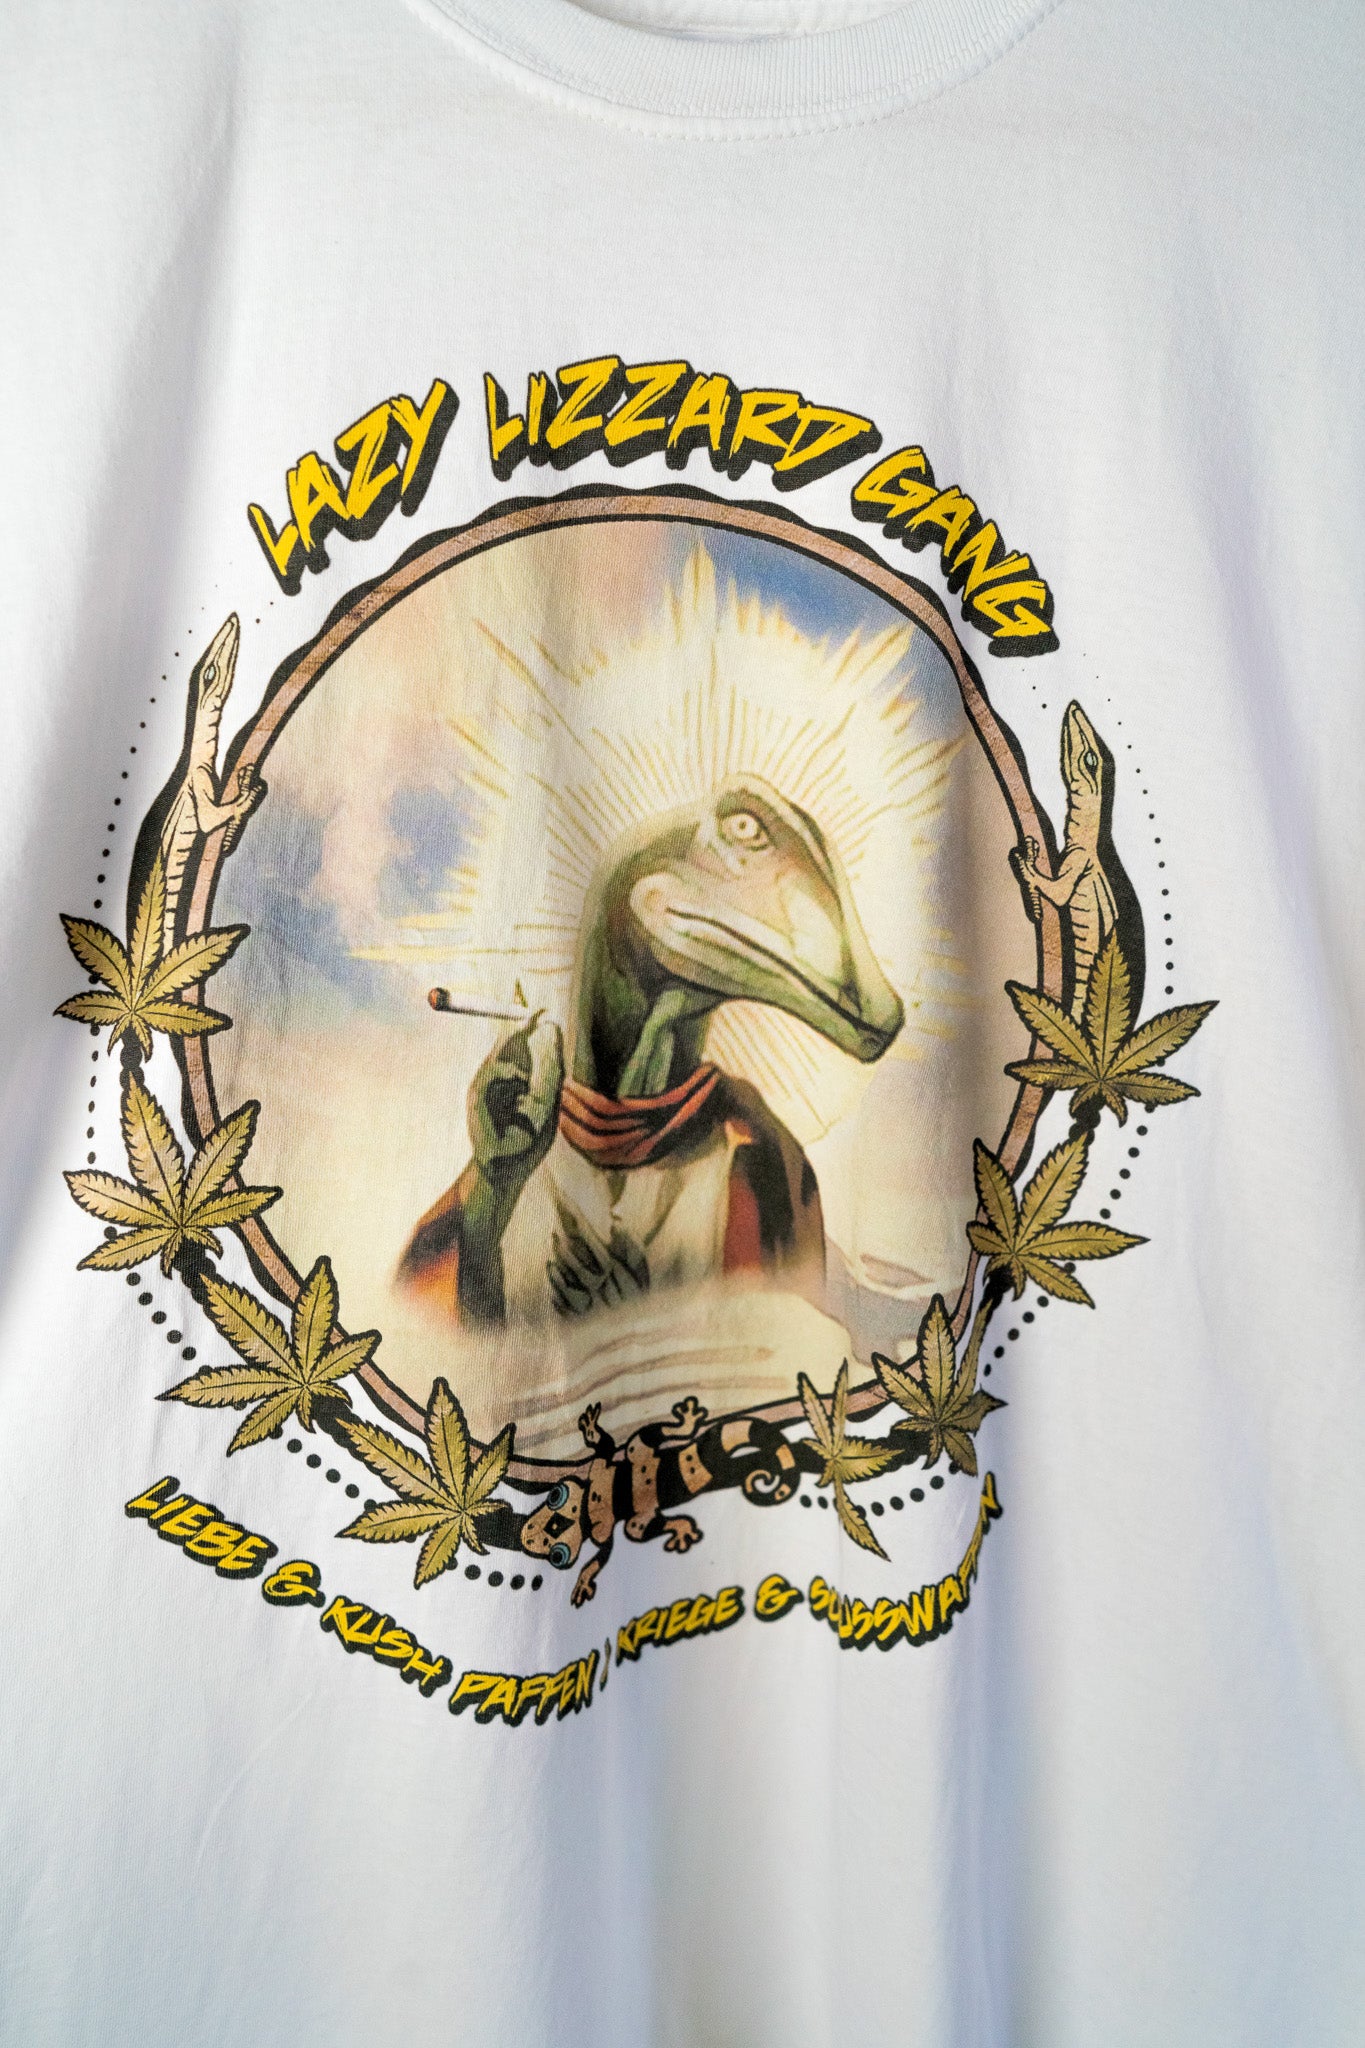 Lazy Lizzard Gang Original Logo Shirt